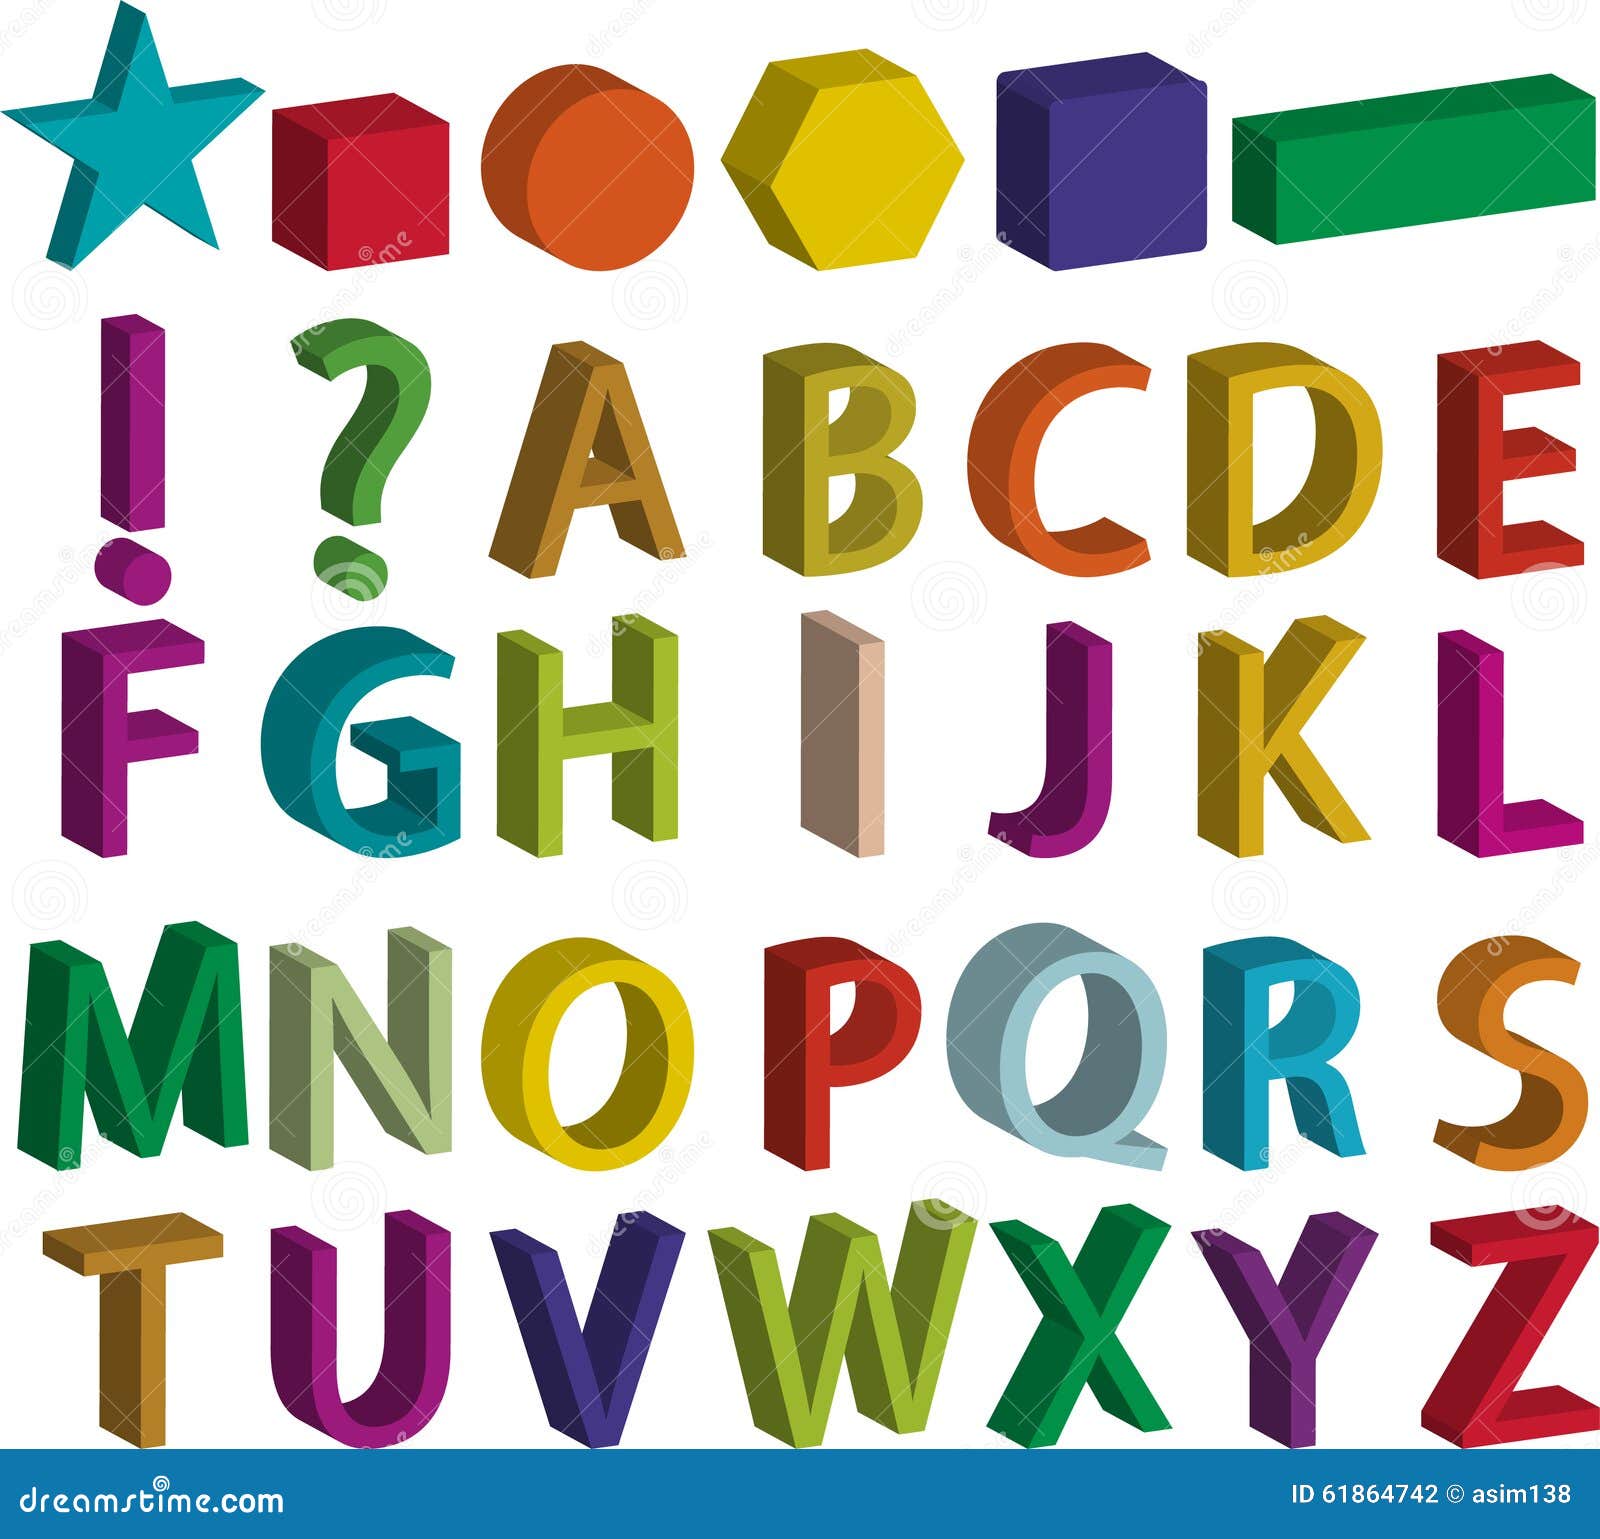 Alphabet Letter Shapes